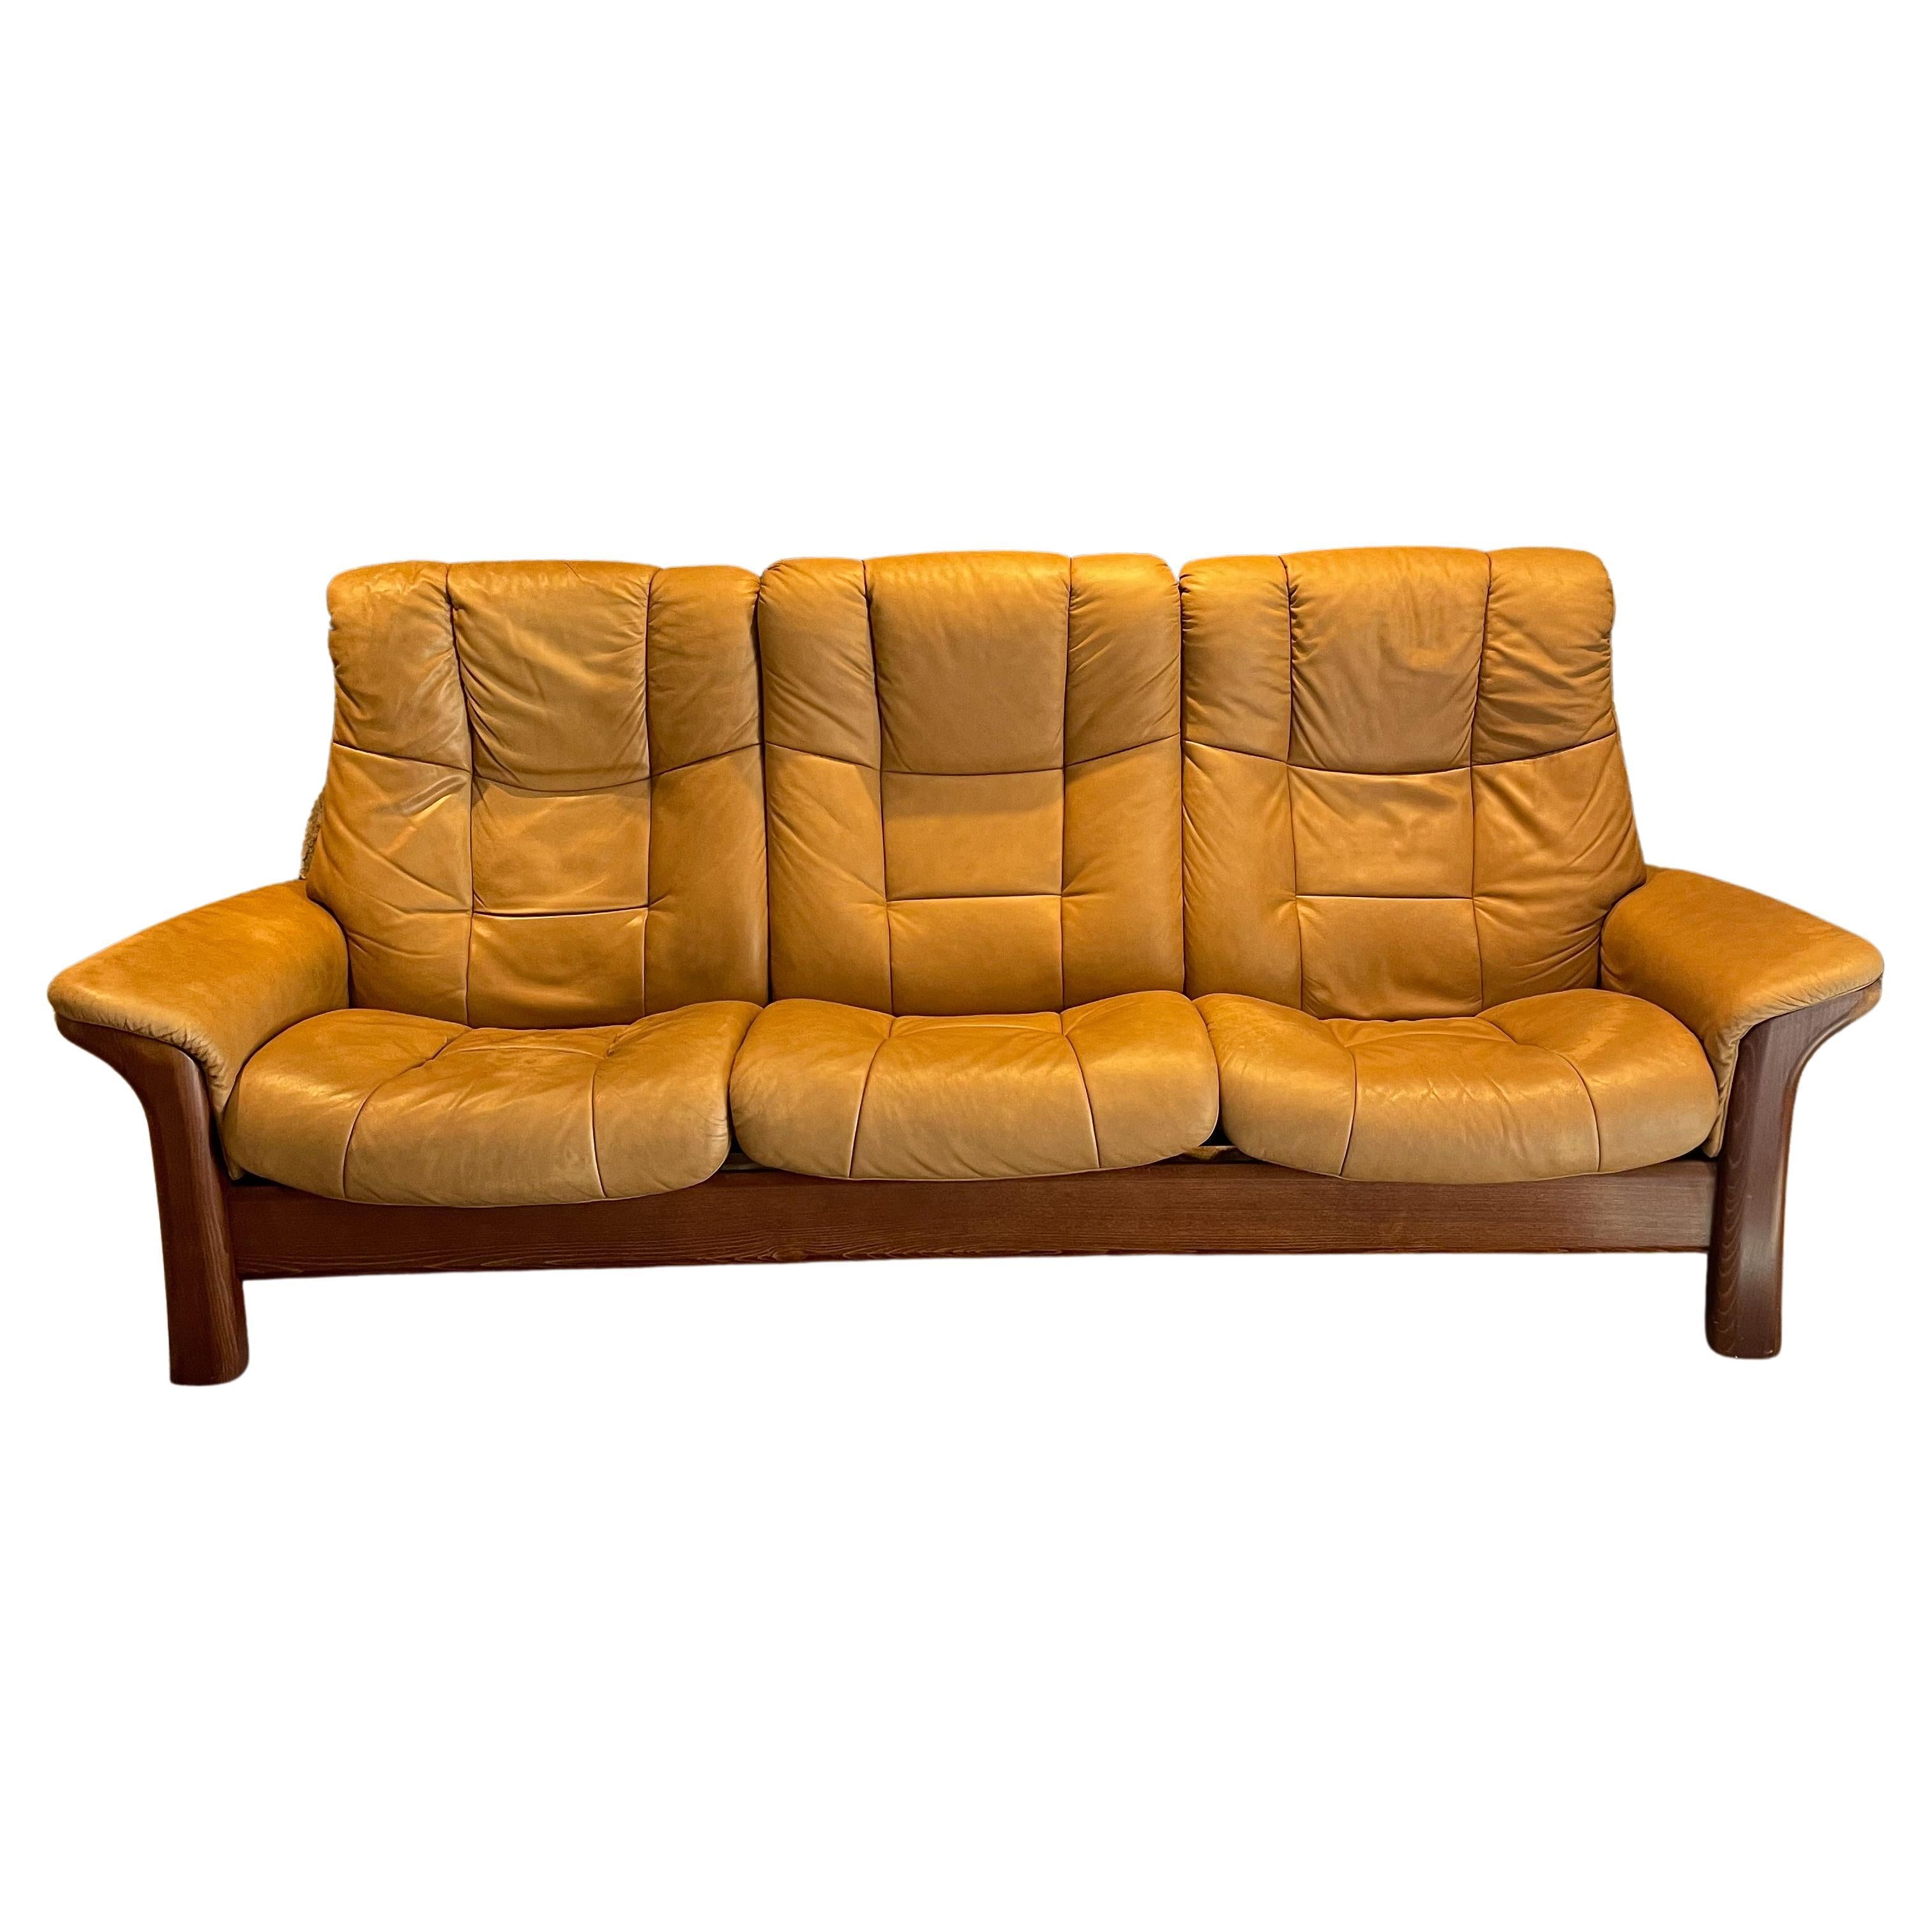 Ekornes Stressless Reclining Leather Sofa High-Back